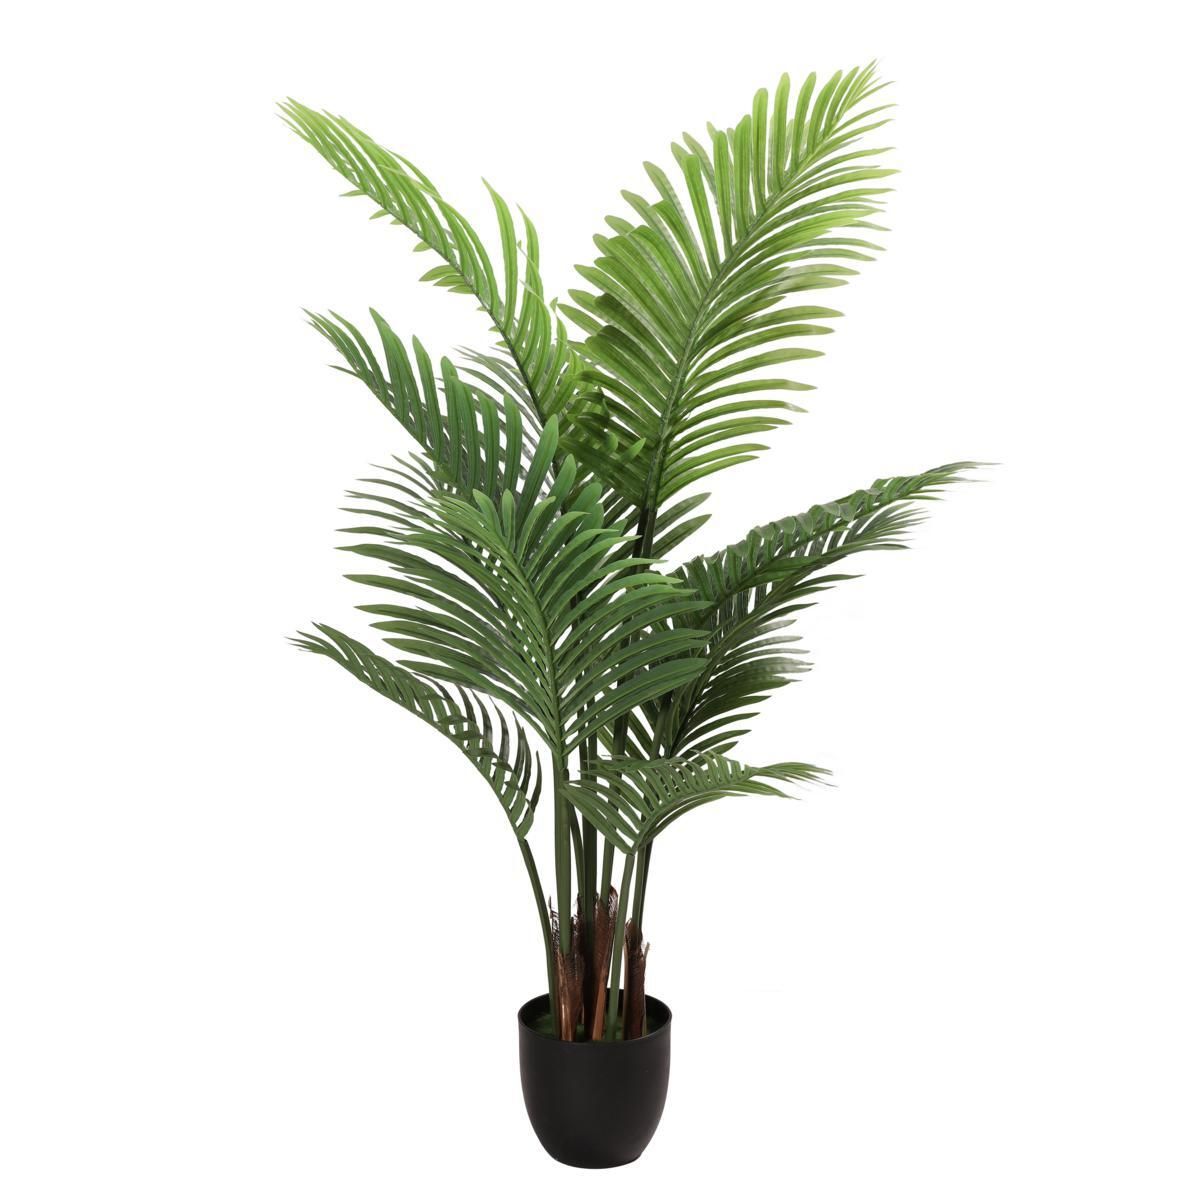 Puleo International 4' Artificial Areca Palm Tree in Black Plastic Pot | HSN